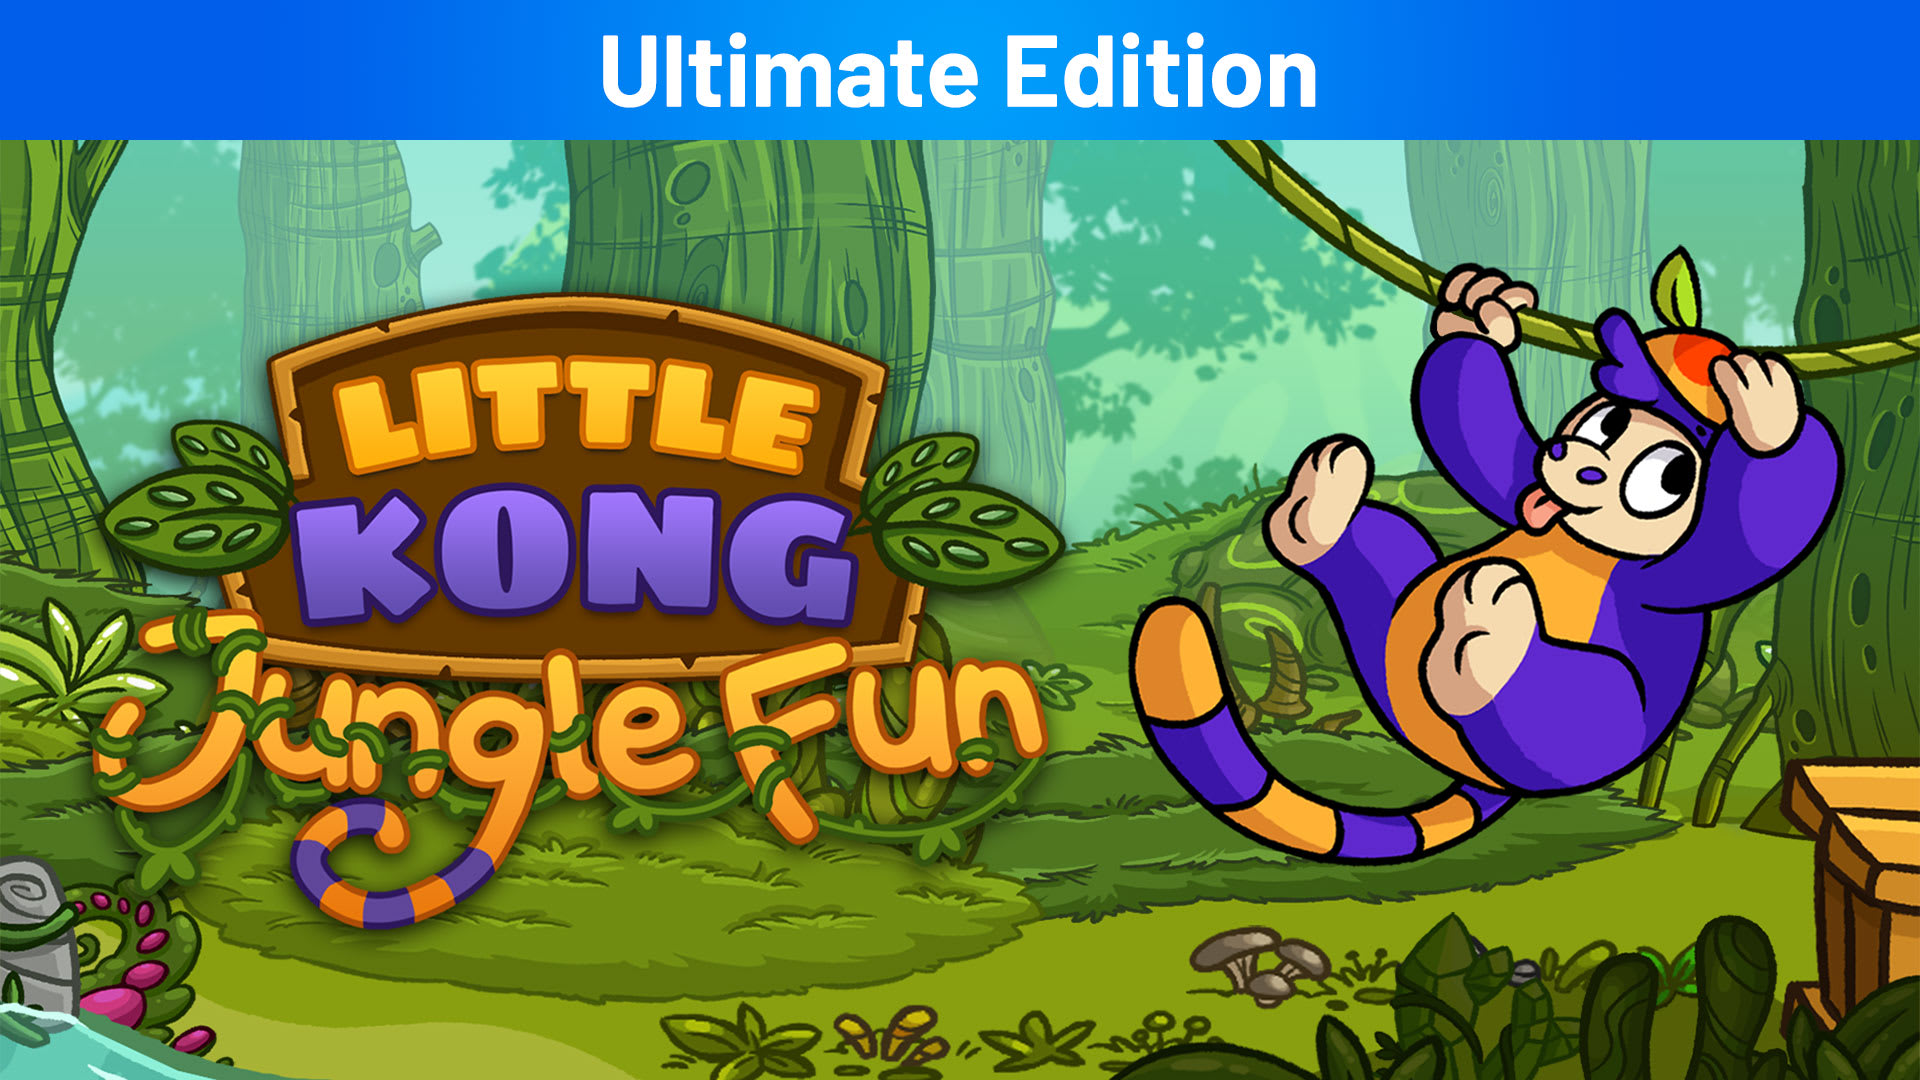 Little Kong Jungle Fun Ultimate Edition